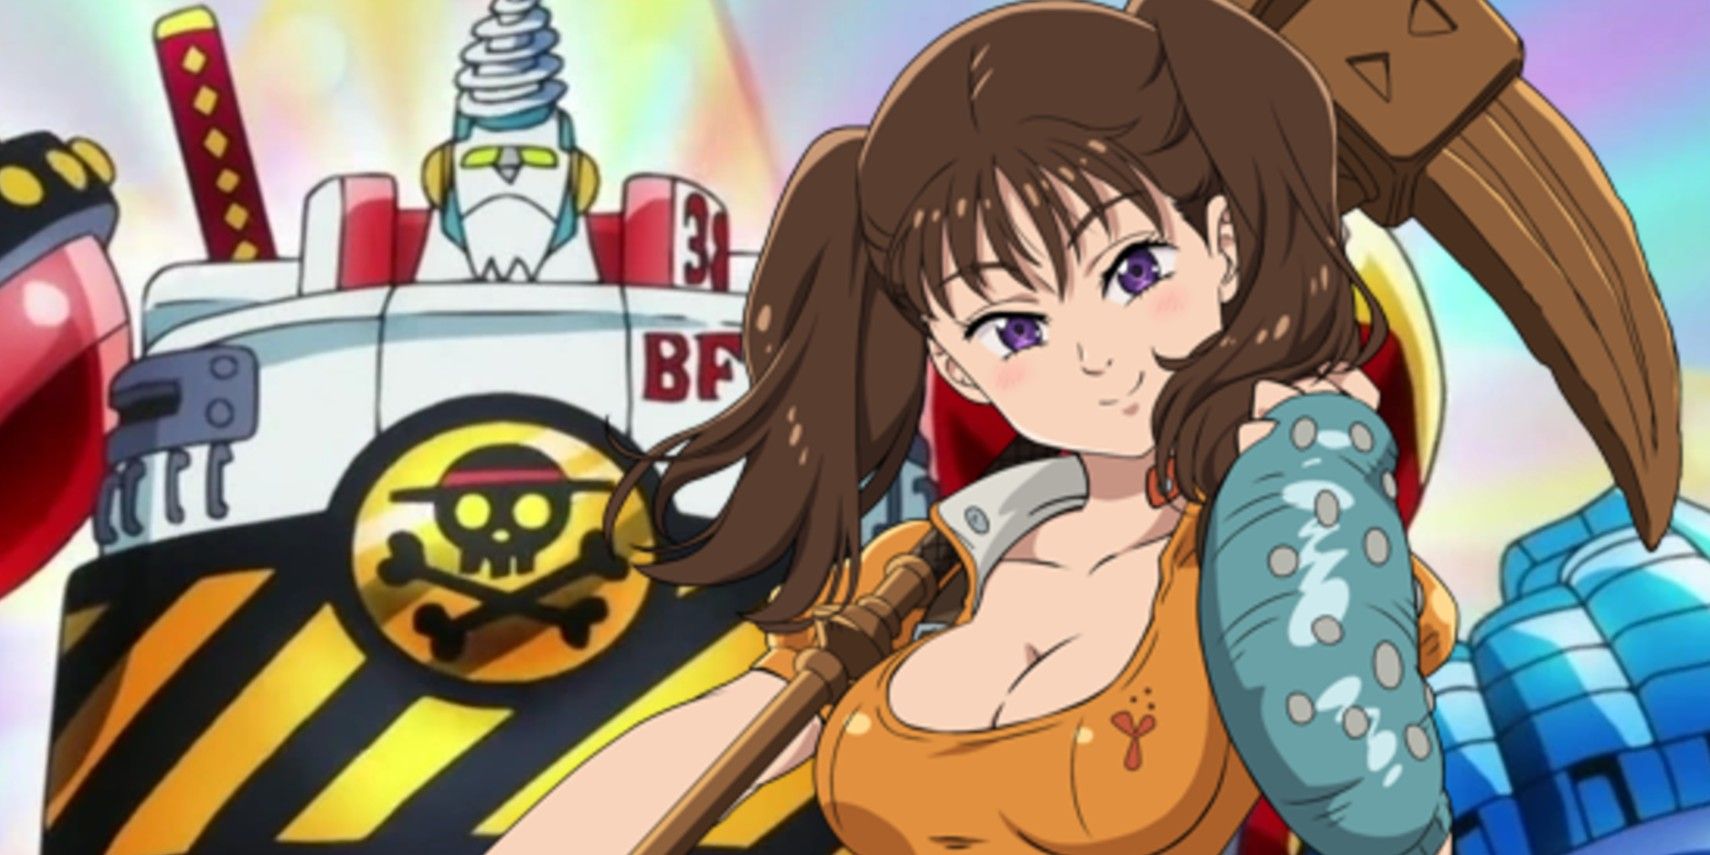 Giant Sword Battle! (Not sexual?) | Anime Amino